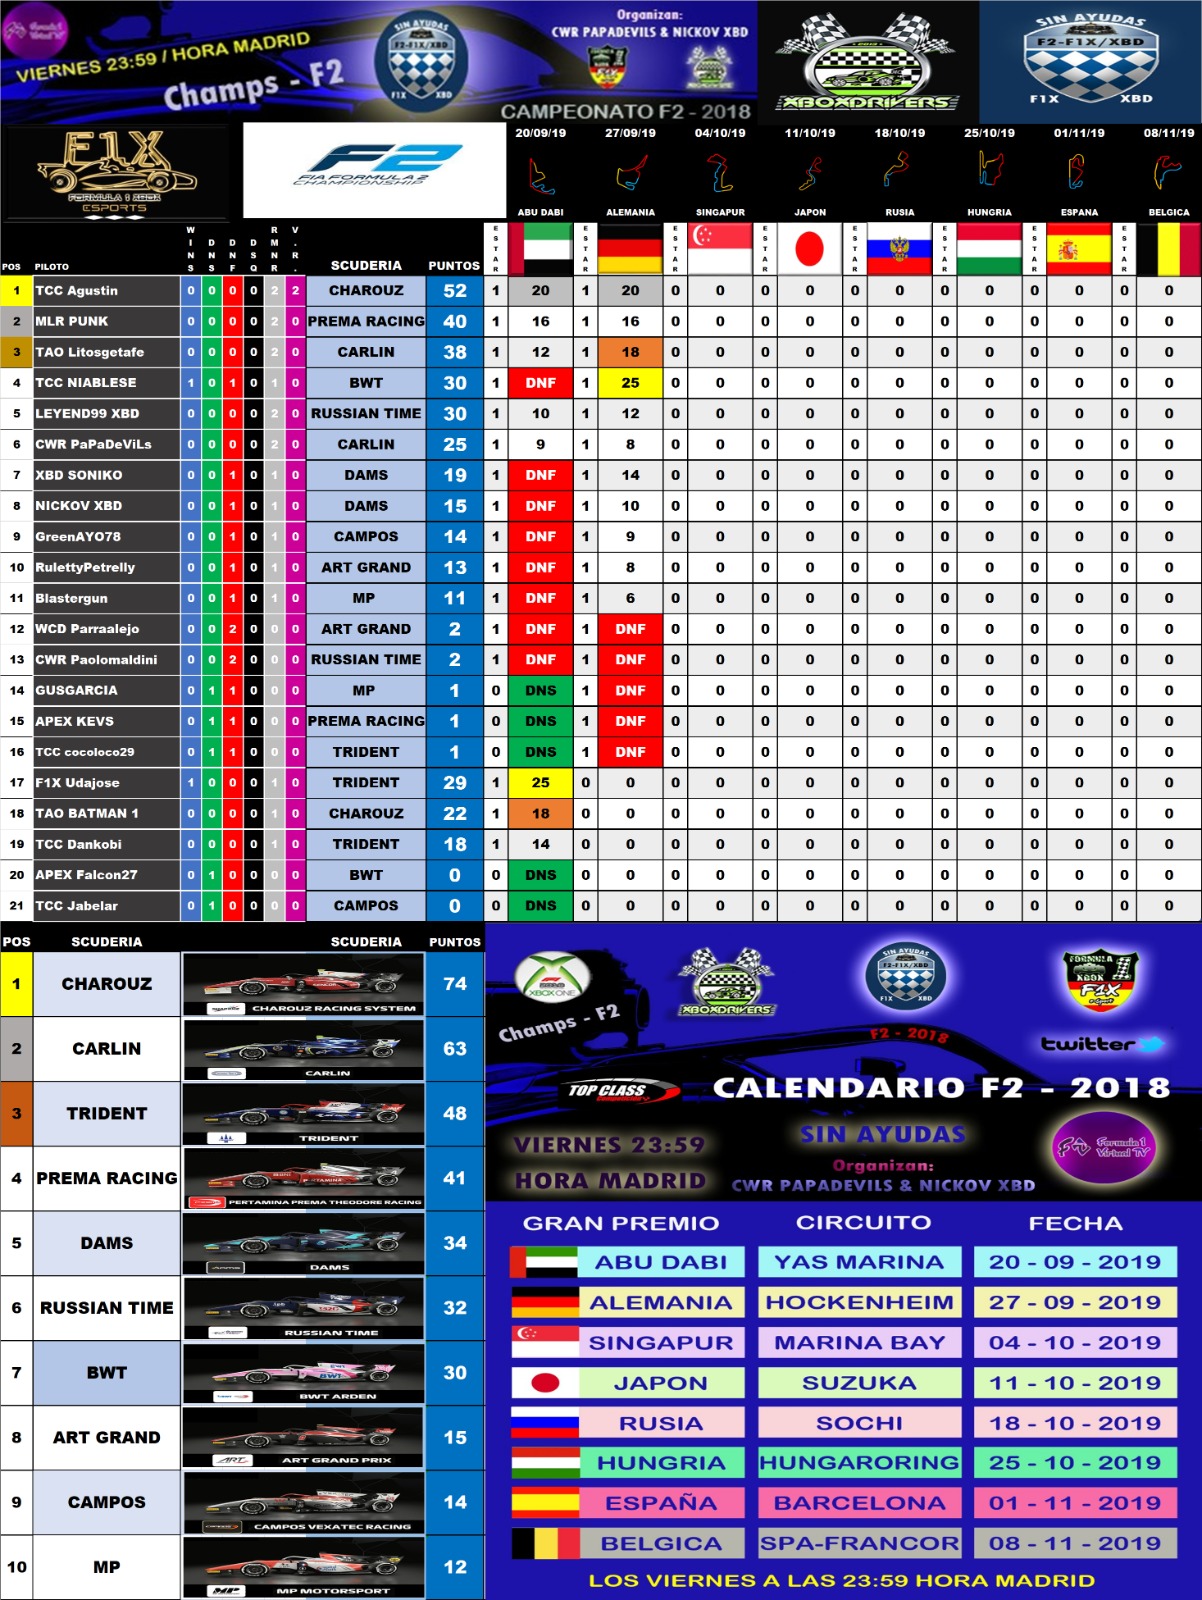  F1 2019 / CAMPEONATO F1 2018 - F2 / XBD - F1X / VIERNES 23:59 HORA MADRID / SIN AYUDAS / CLASIFICACION GENERAL. F210